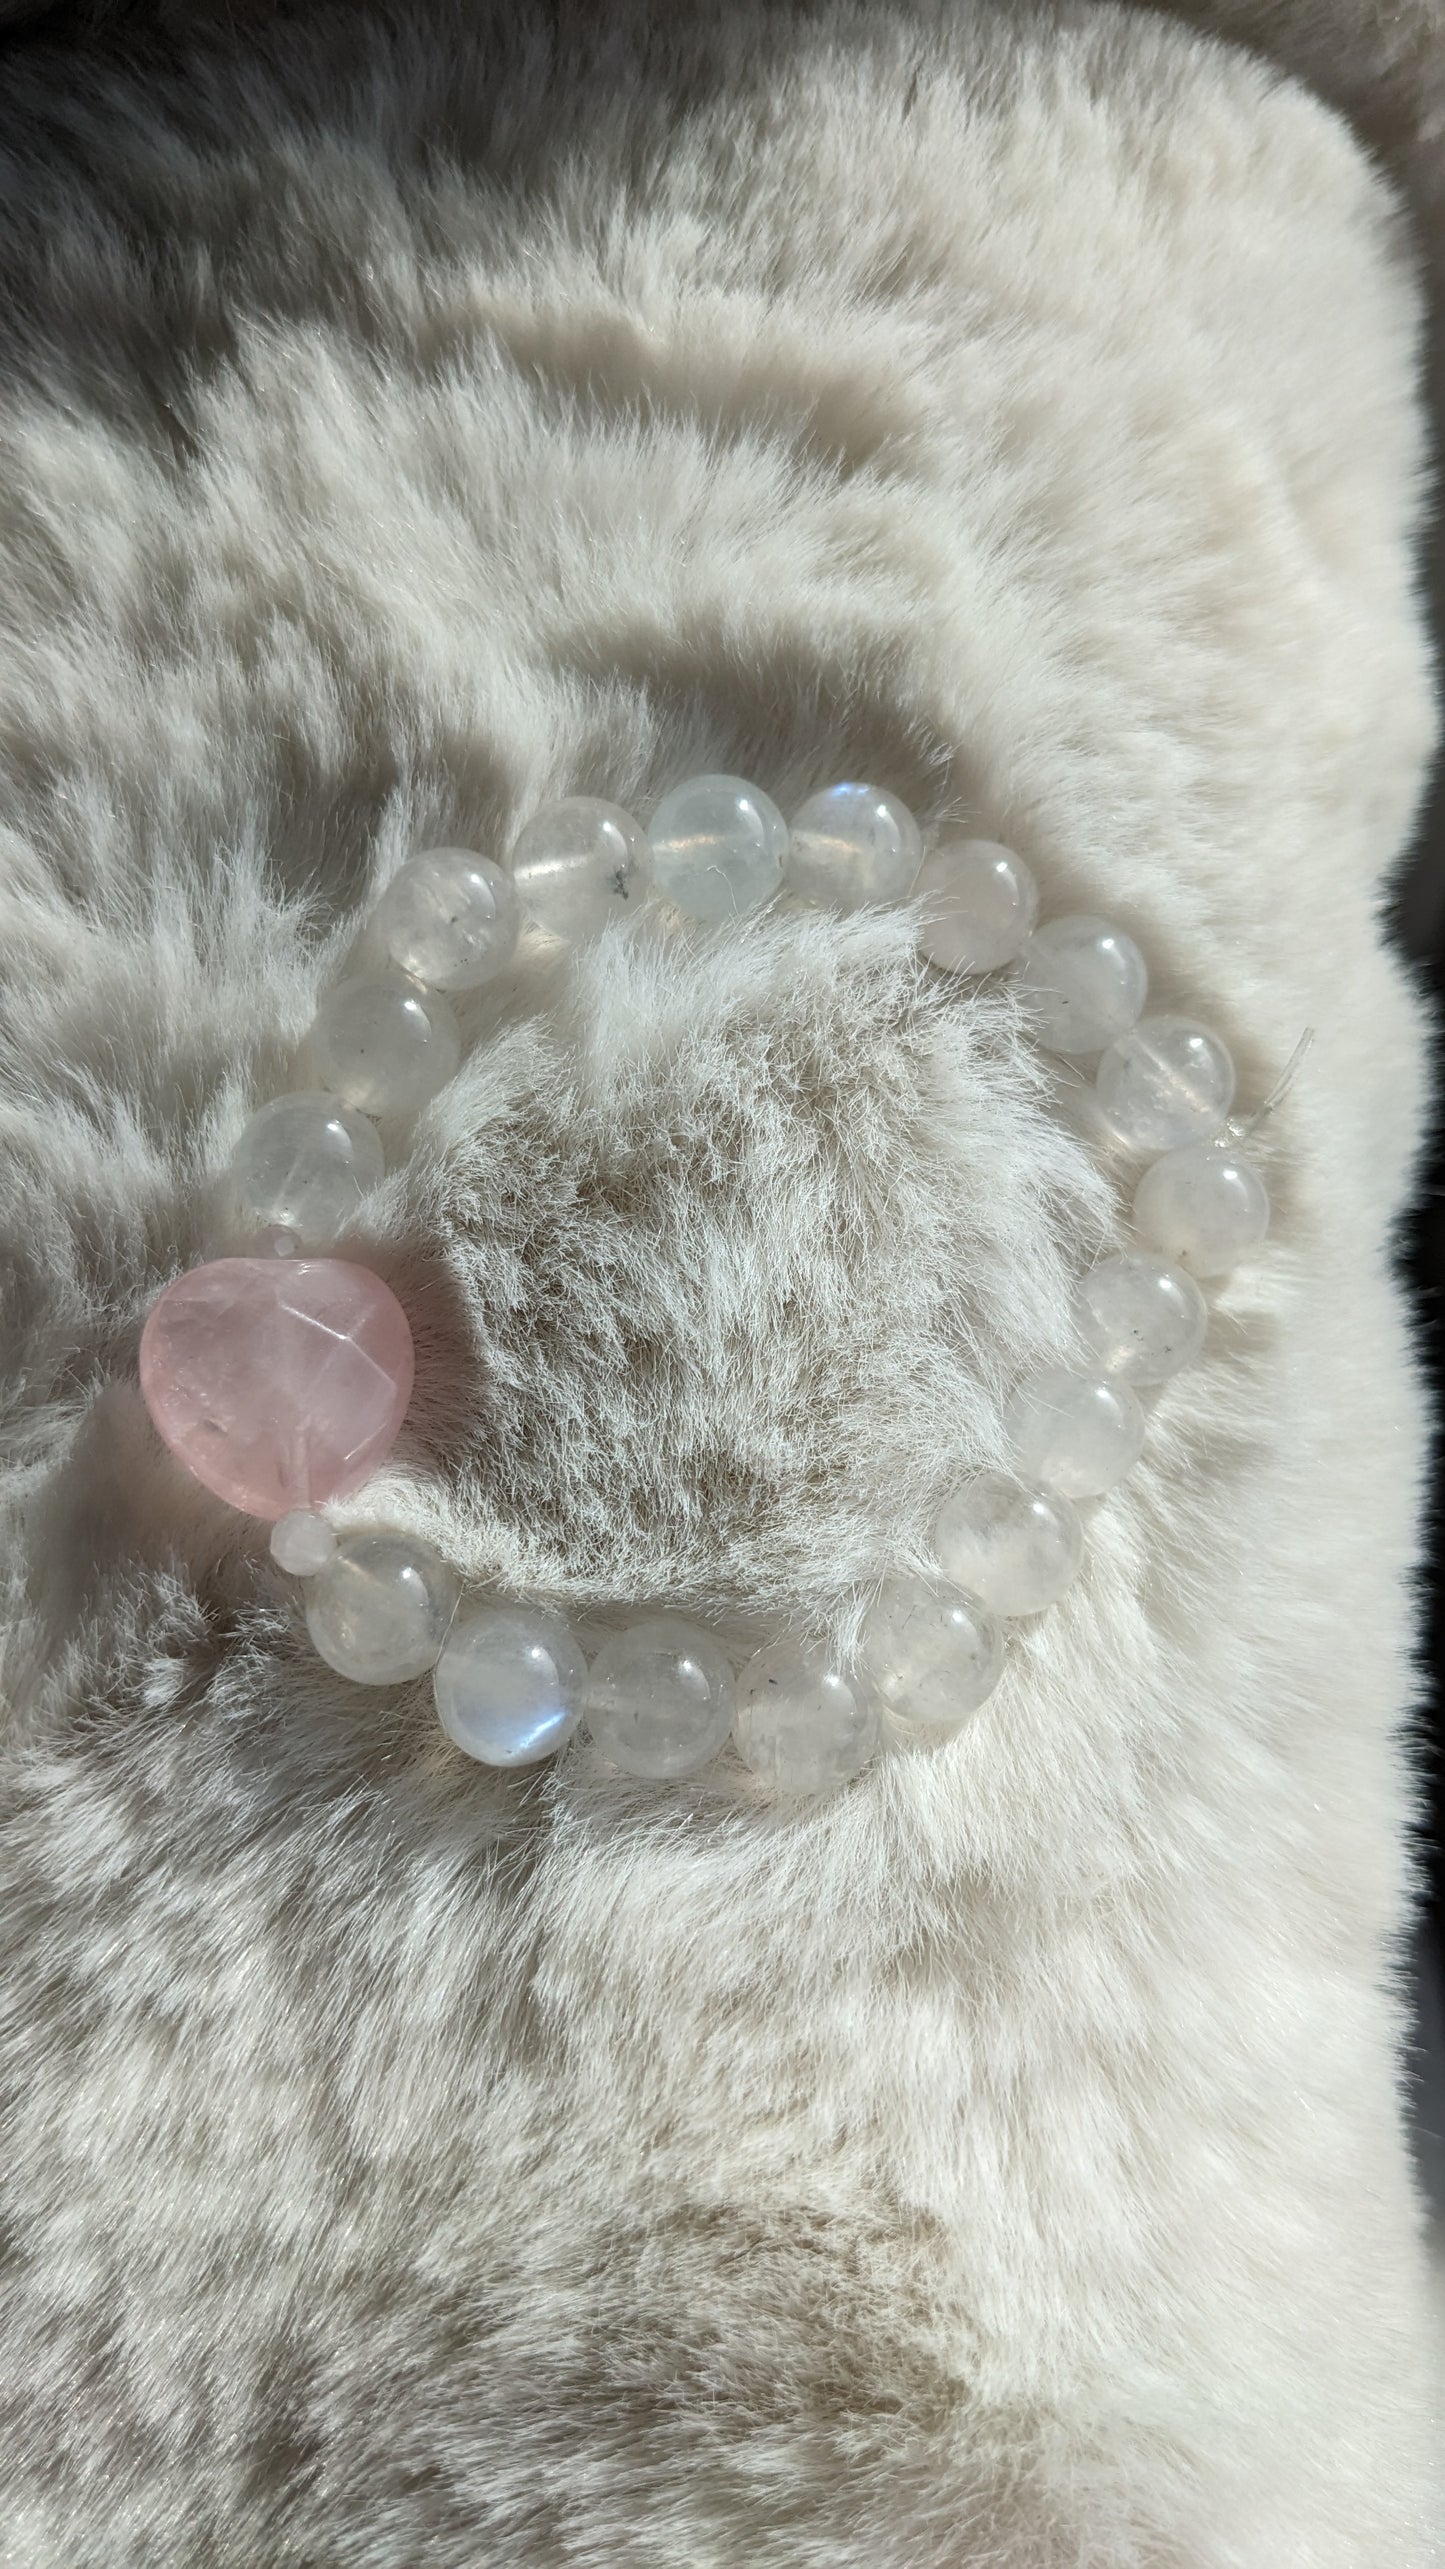 Bracelet labradorite blanche quartz rose